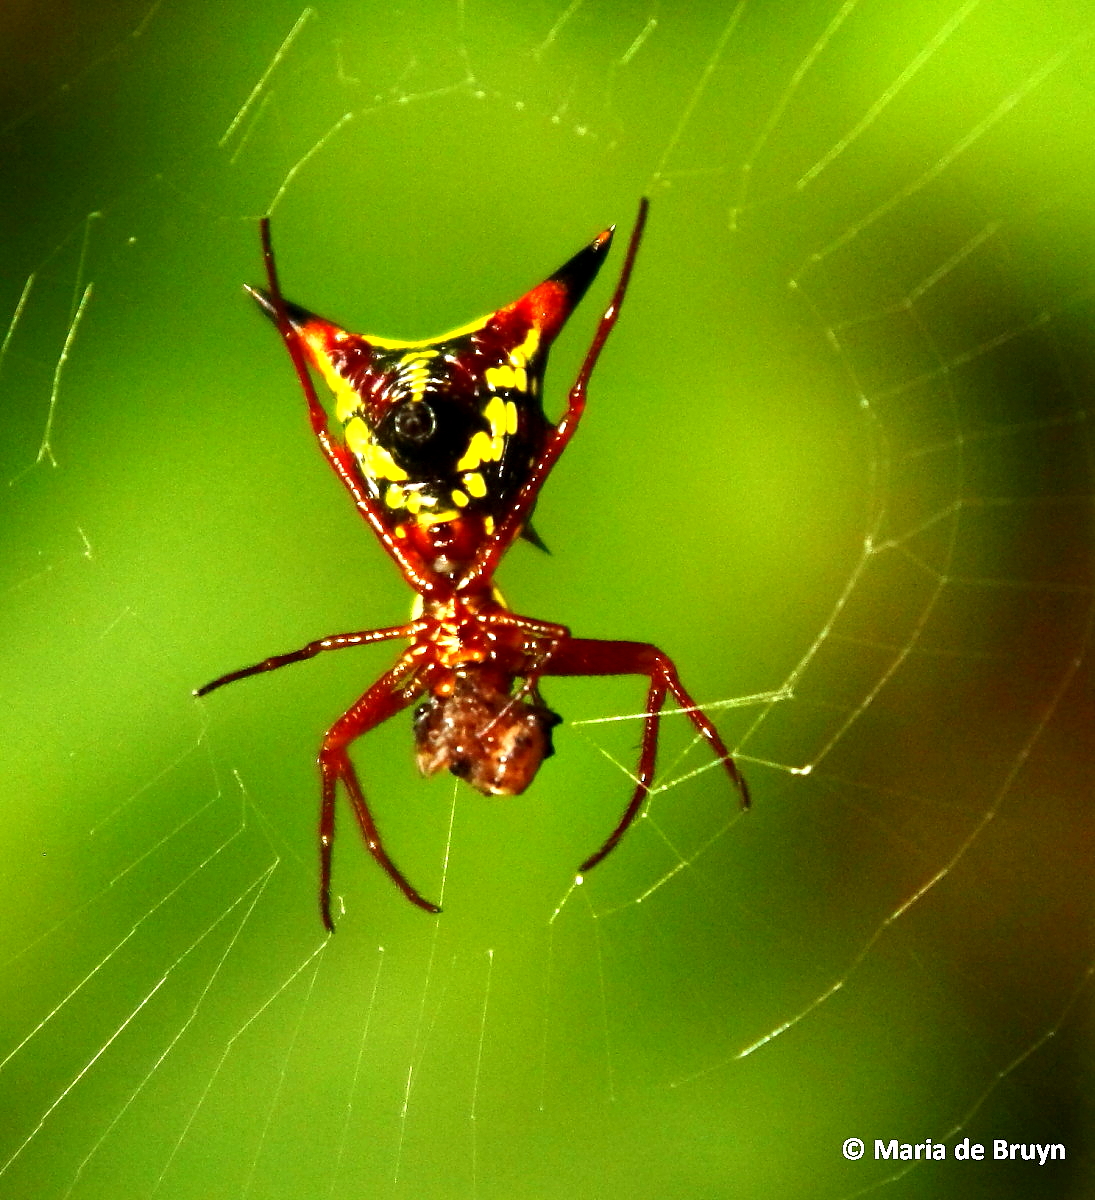 Arrow-shaped micrathena spider